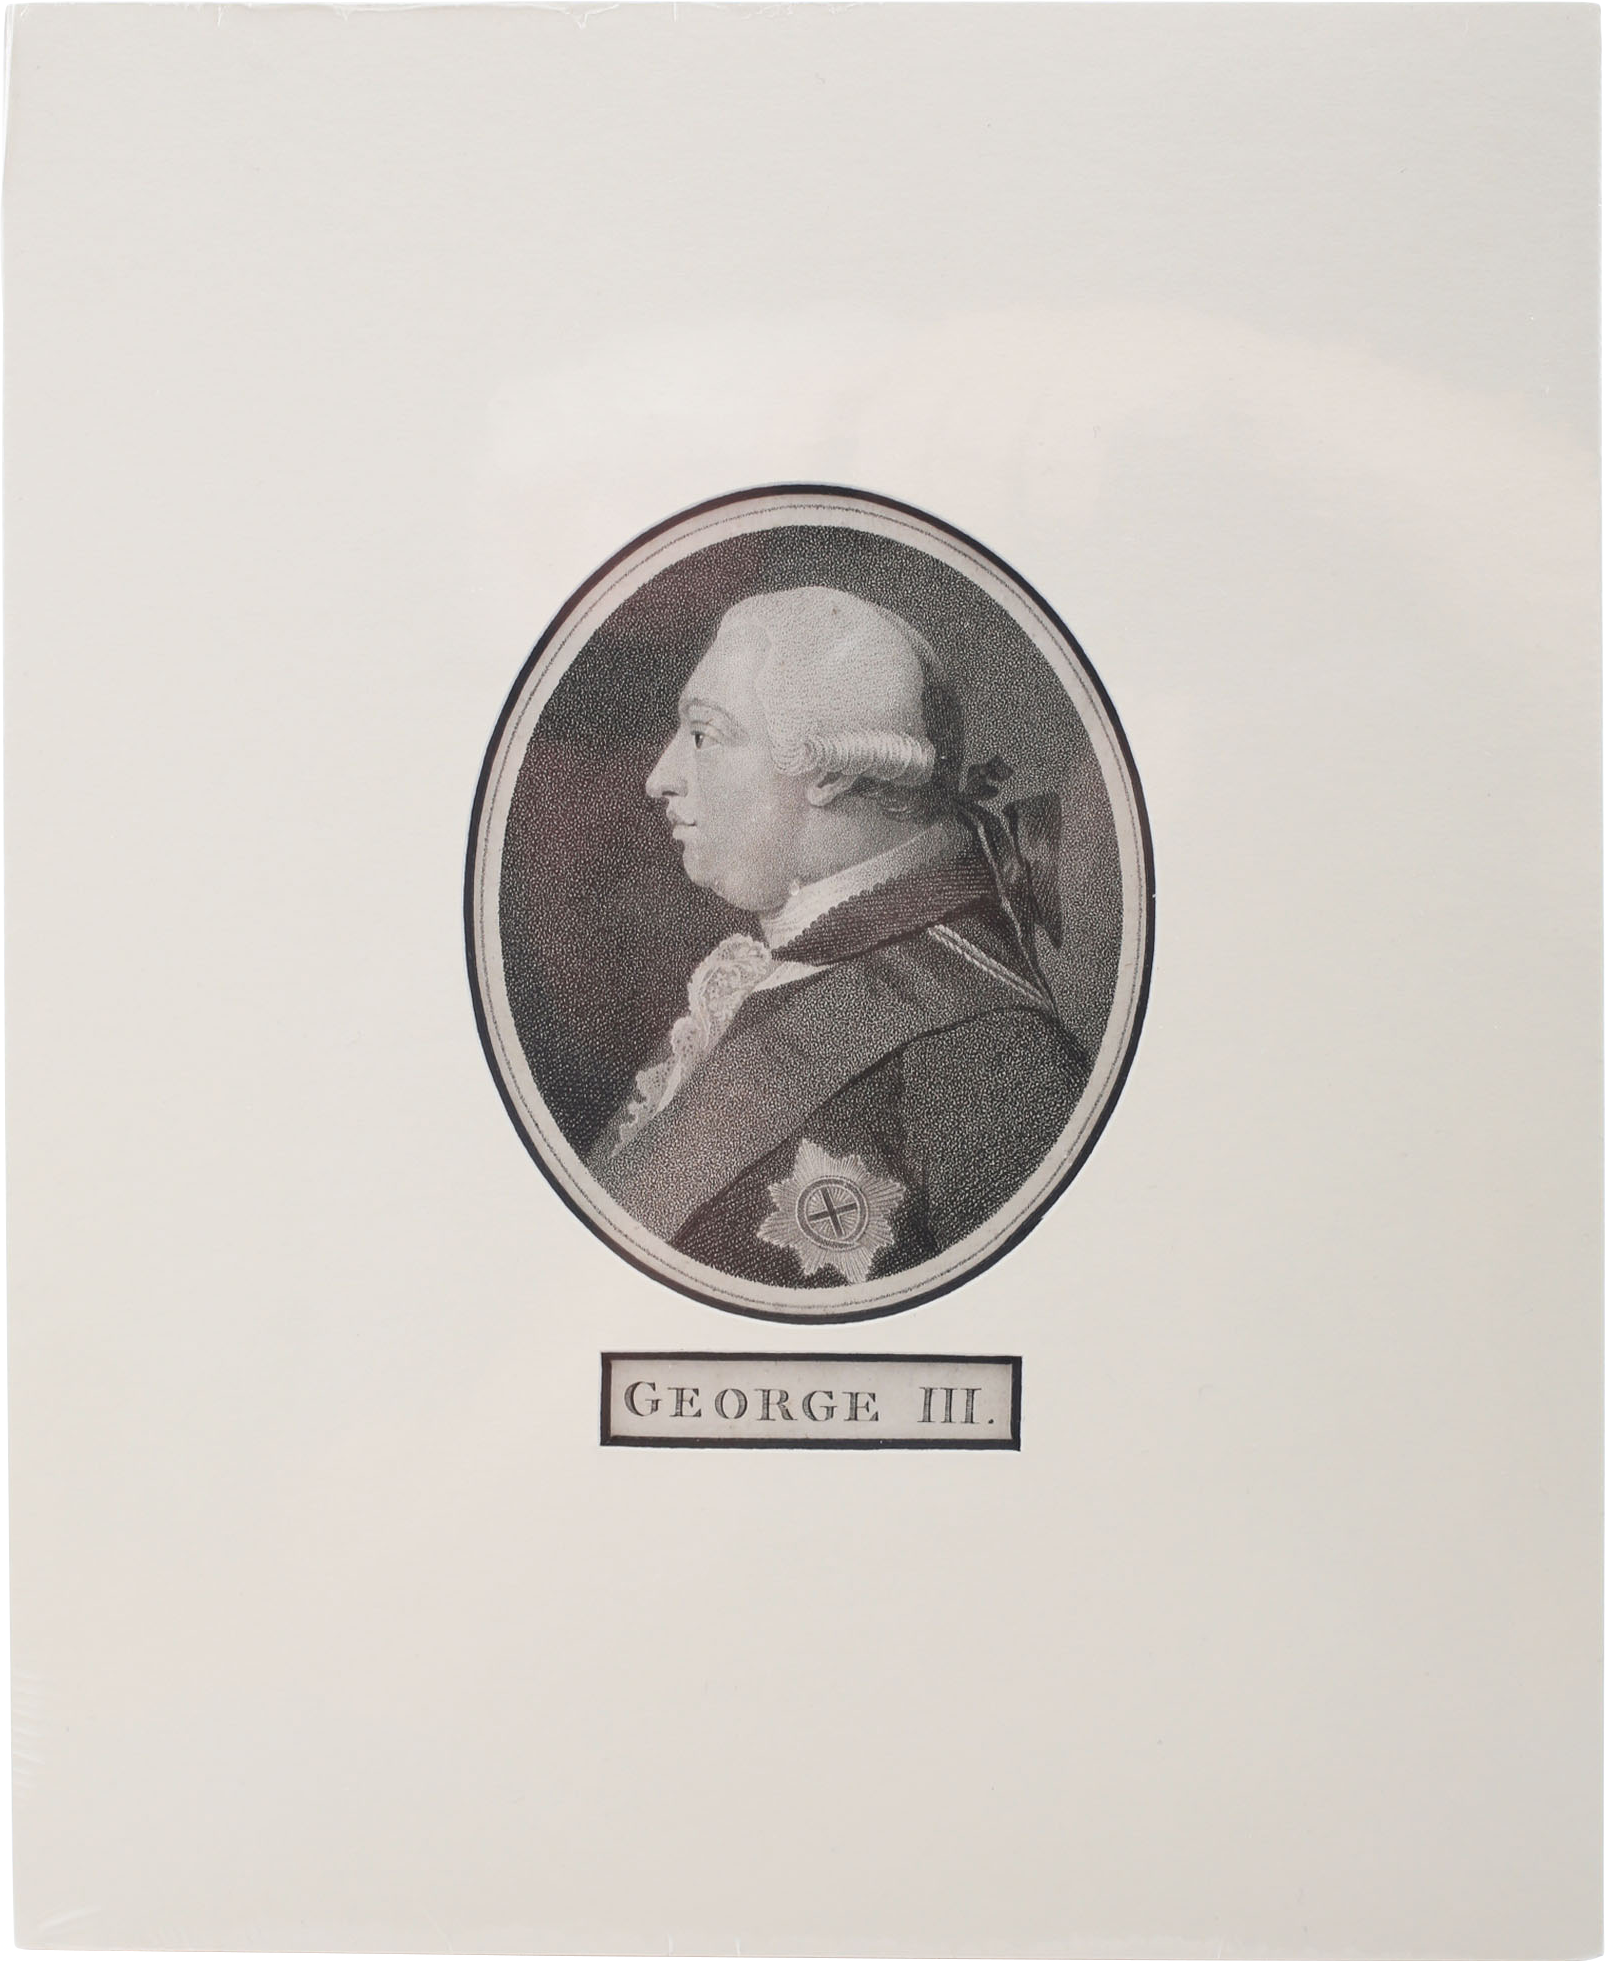 ORIGINAL LITHOGRAPH C.1770-80, GEORGE III